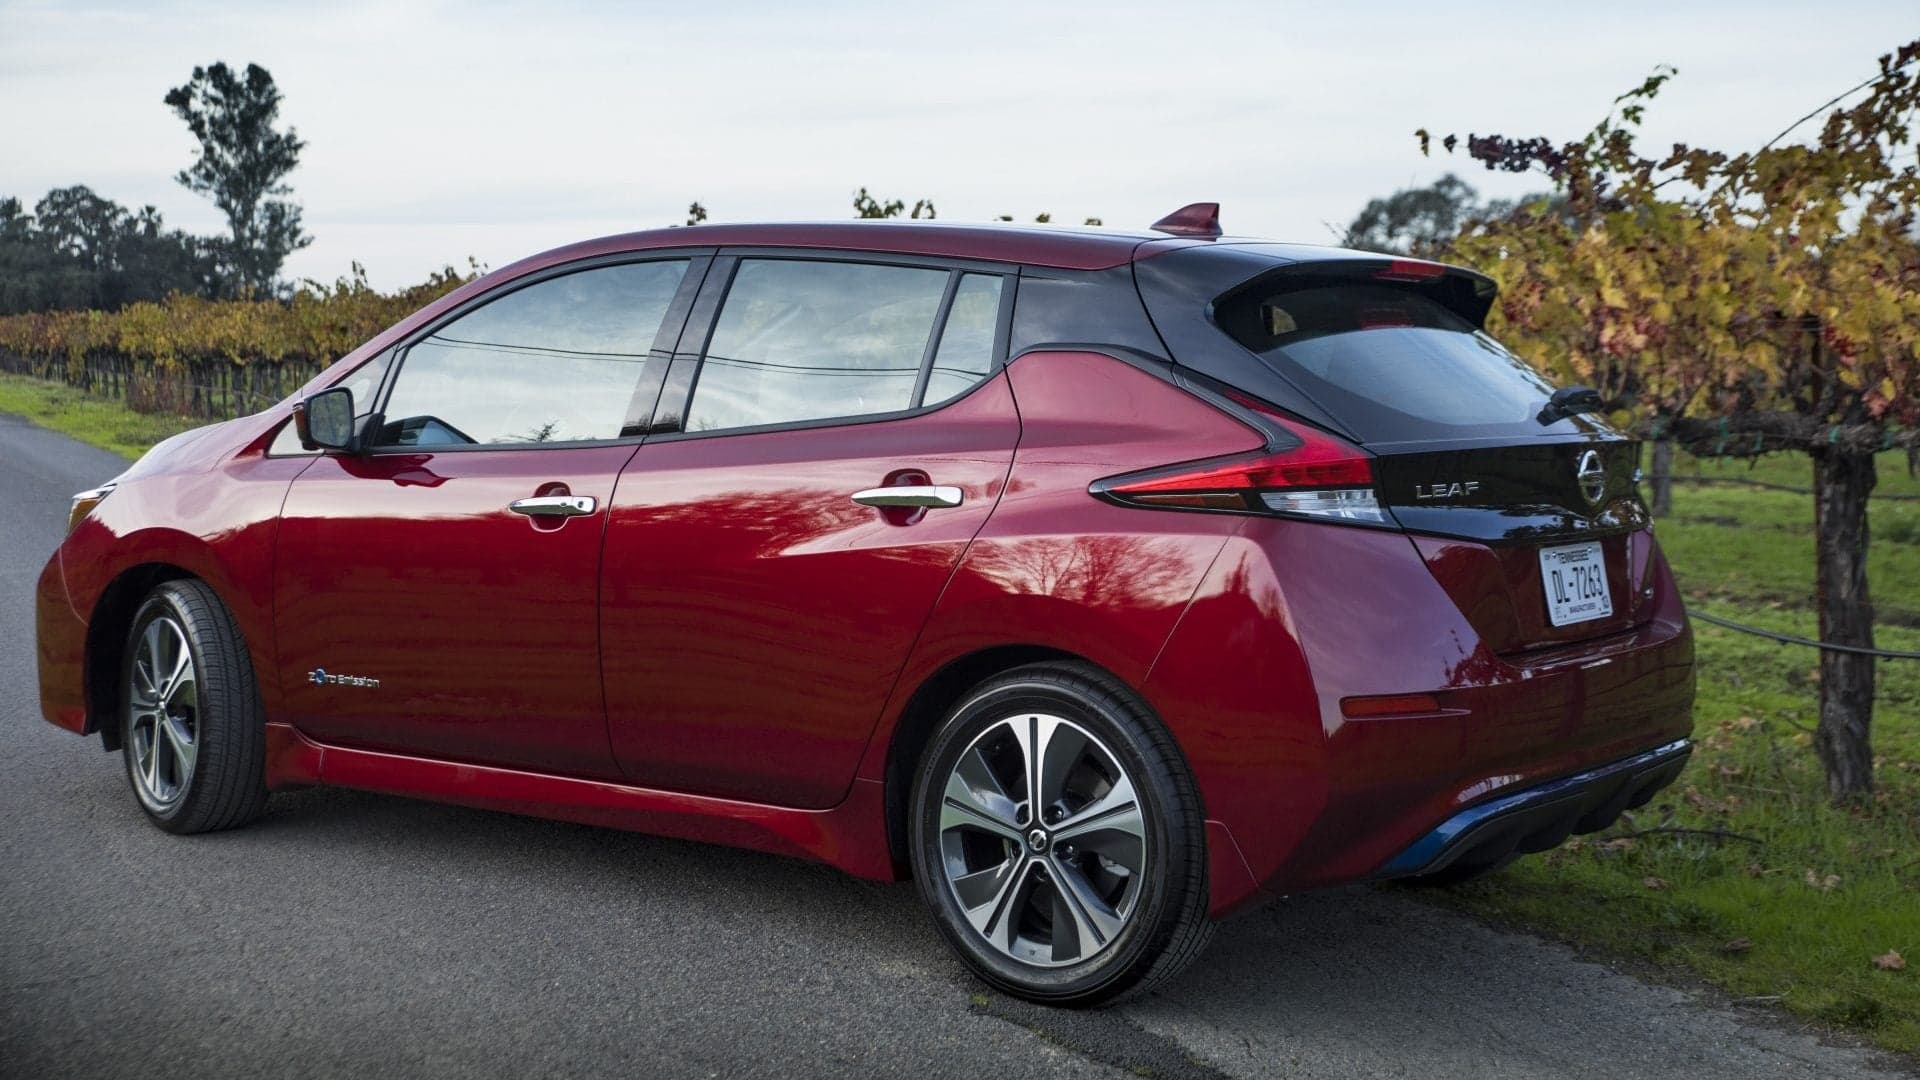 2019 Nissan Leaf: New Safety Tech, Still Short on Range